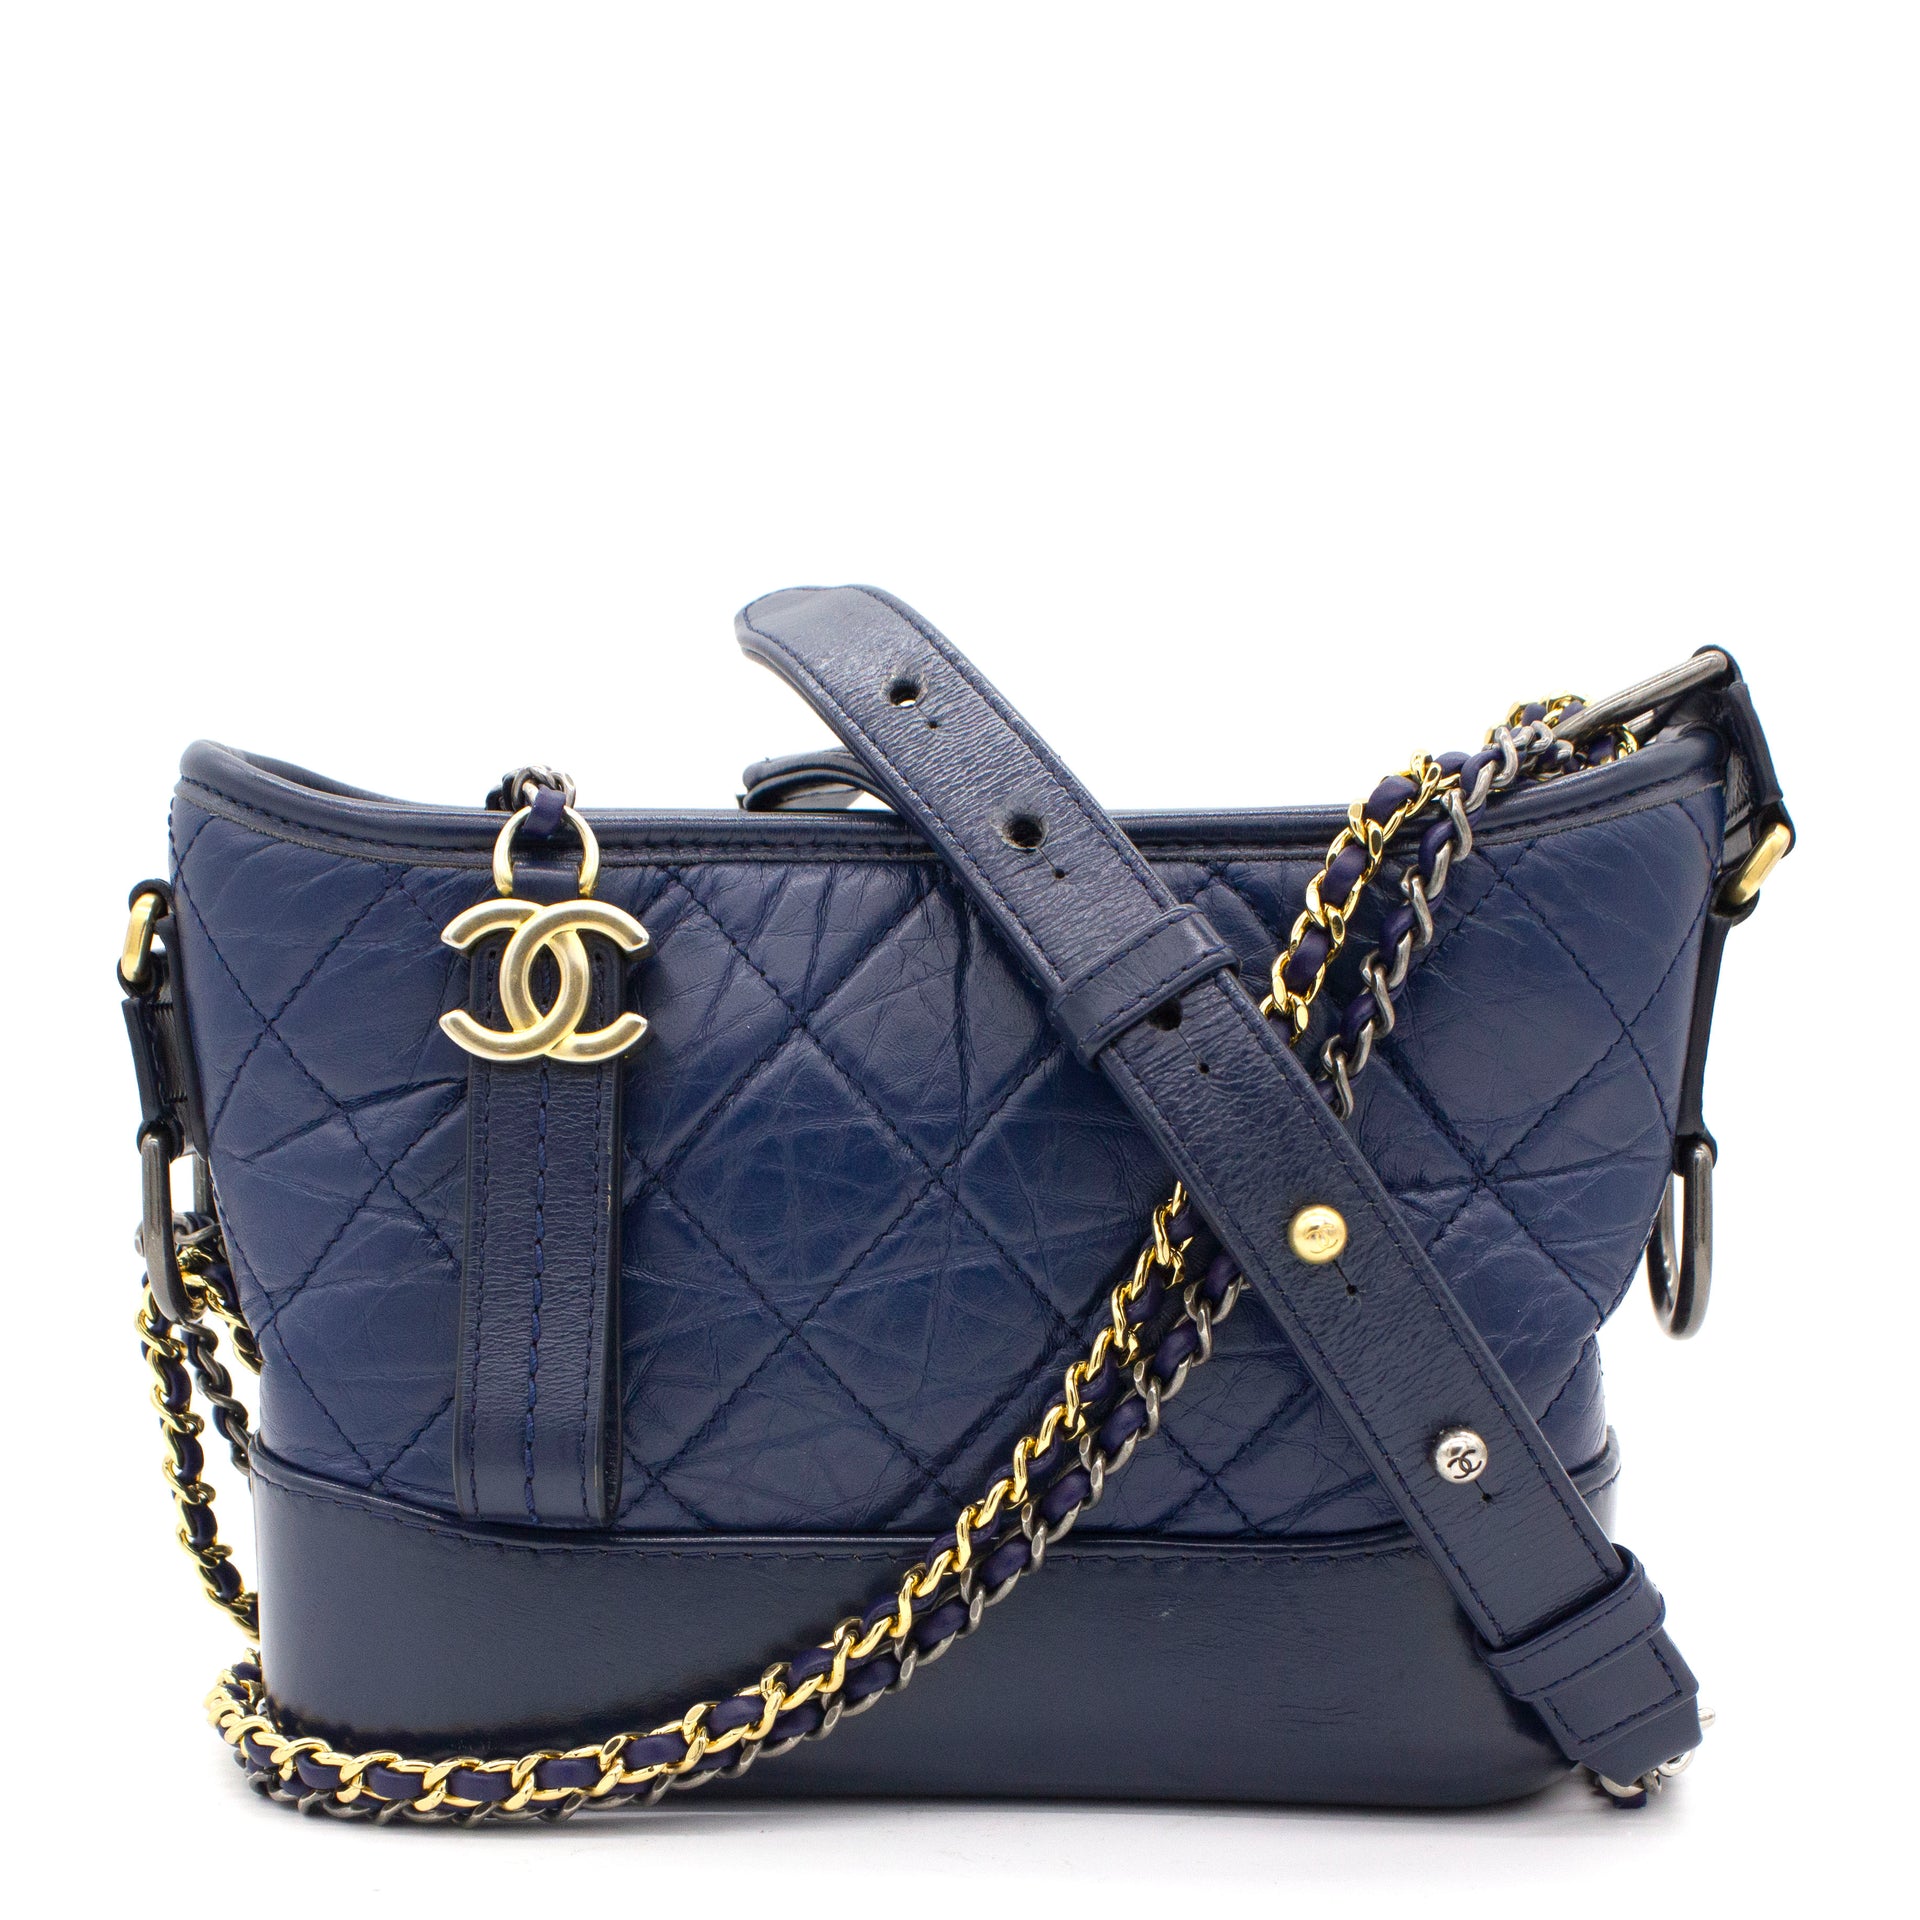 Chanel Gabrielle Hobo Bag Black  Nice Bag